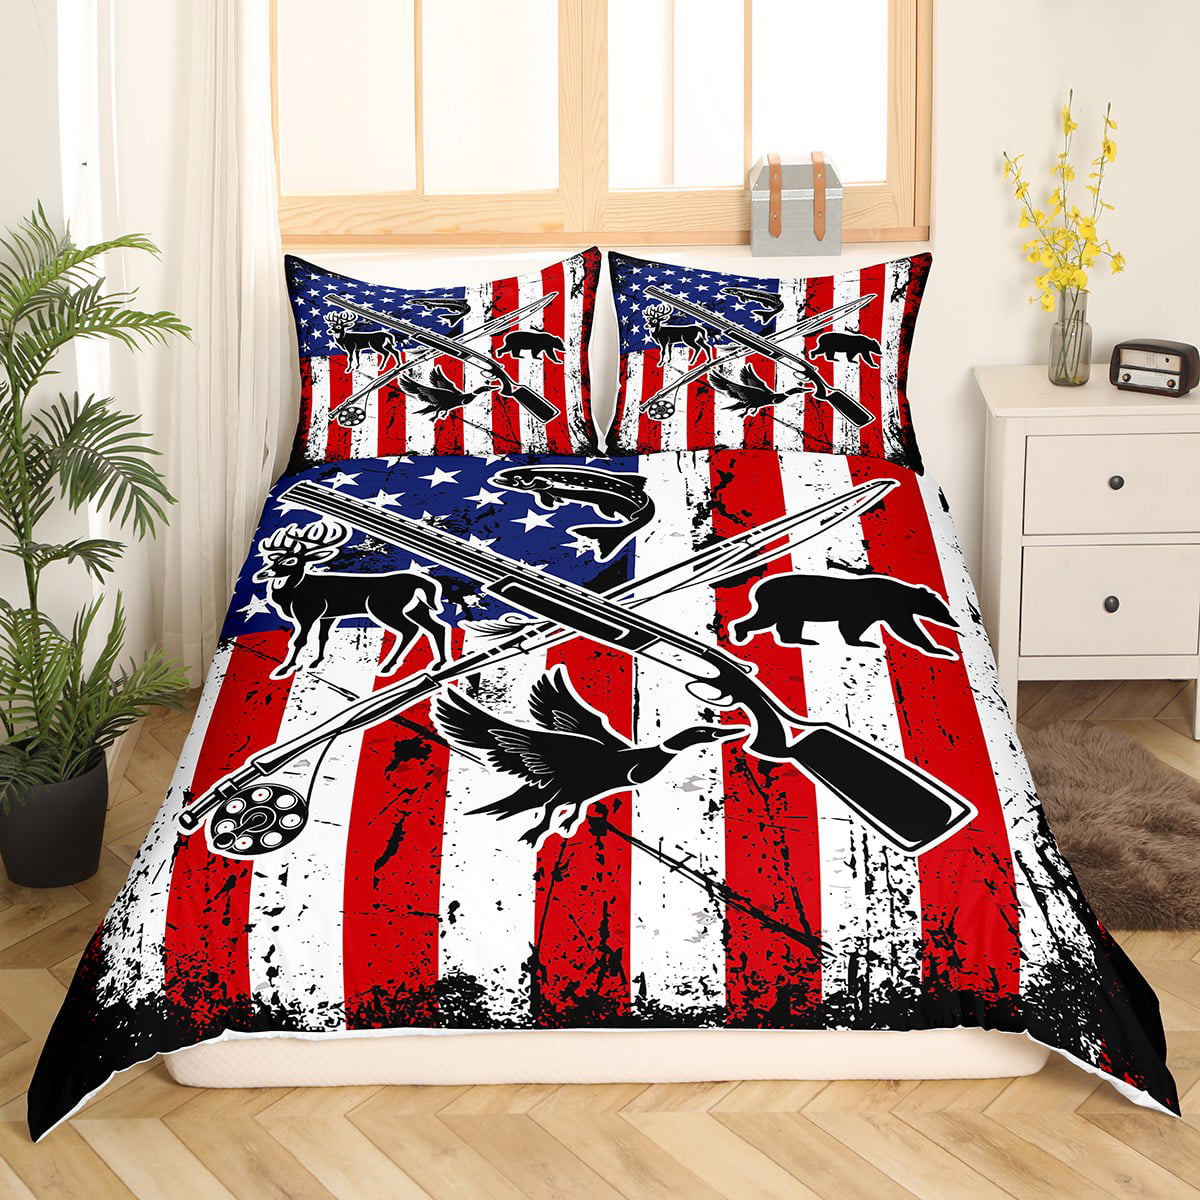  American Flag Comforter Set King for Boy Teens Bass